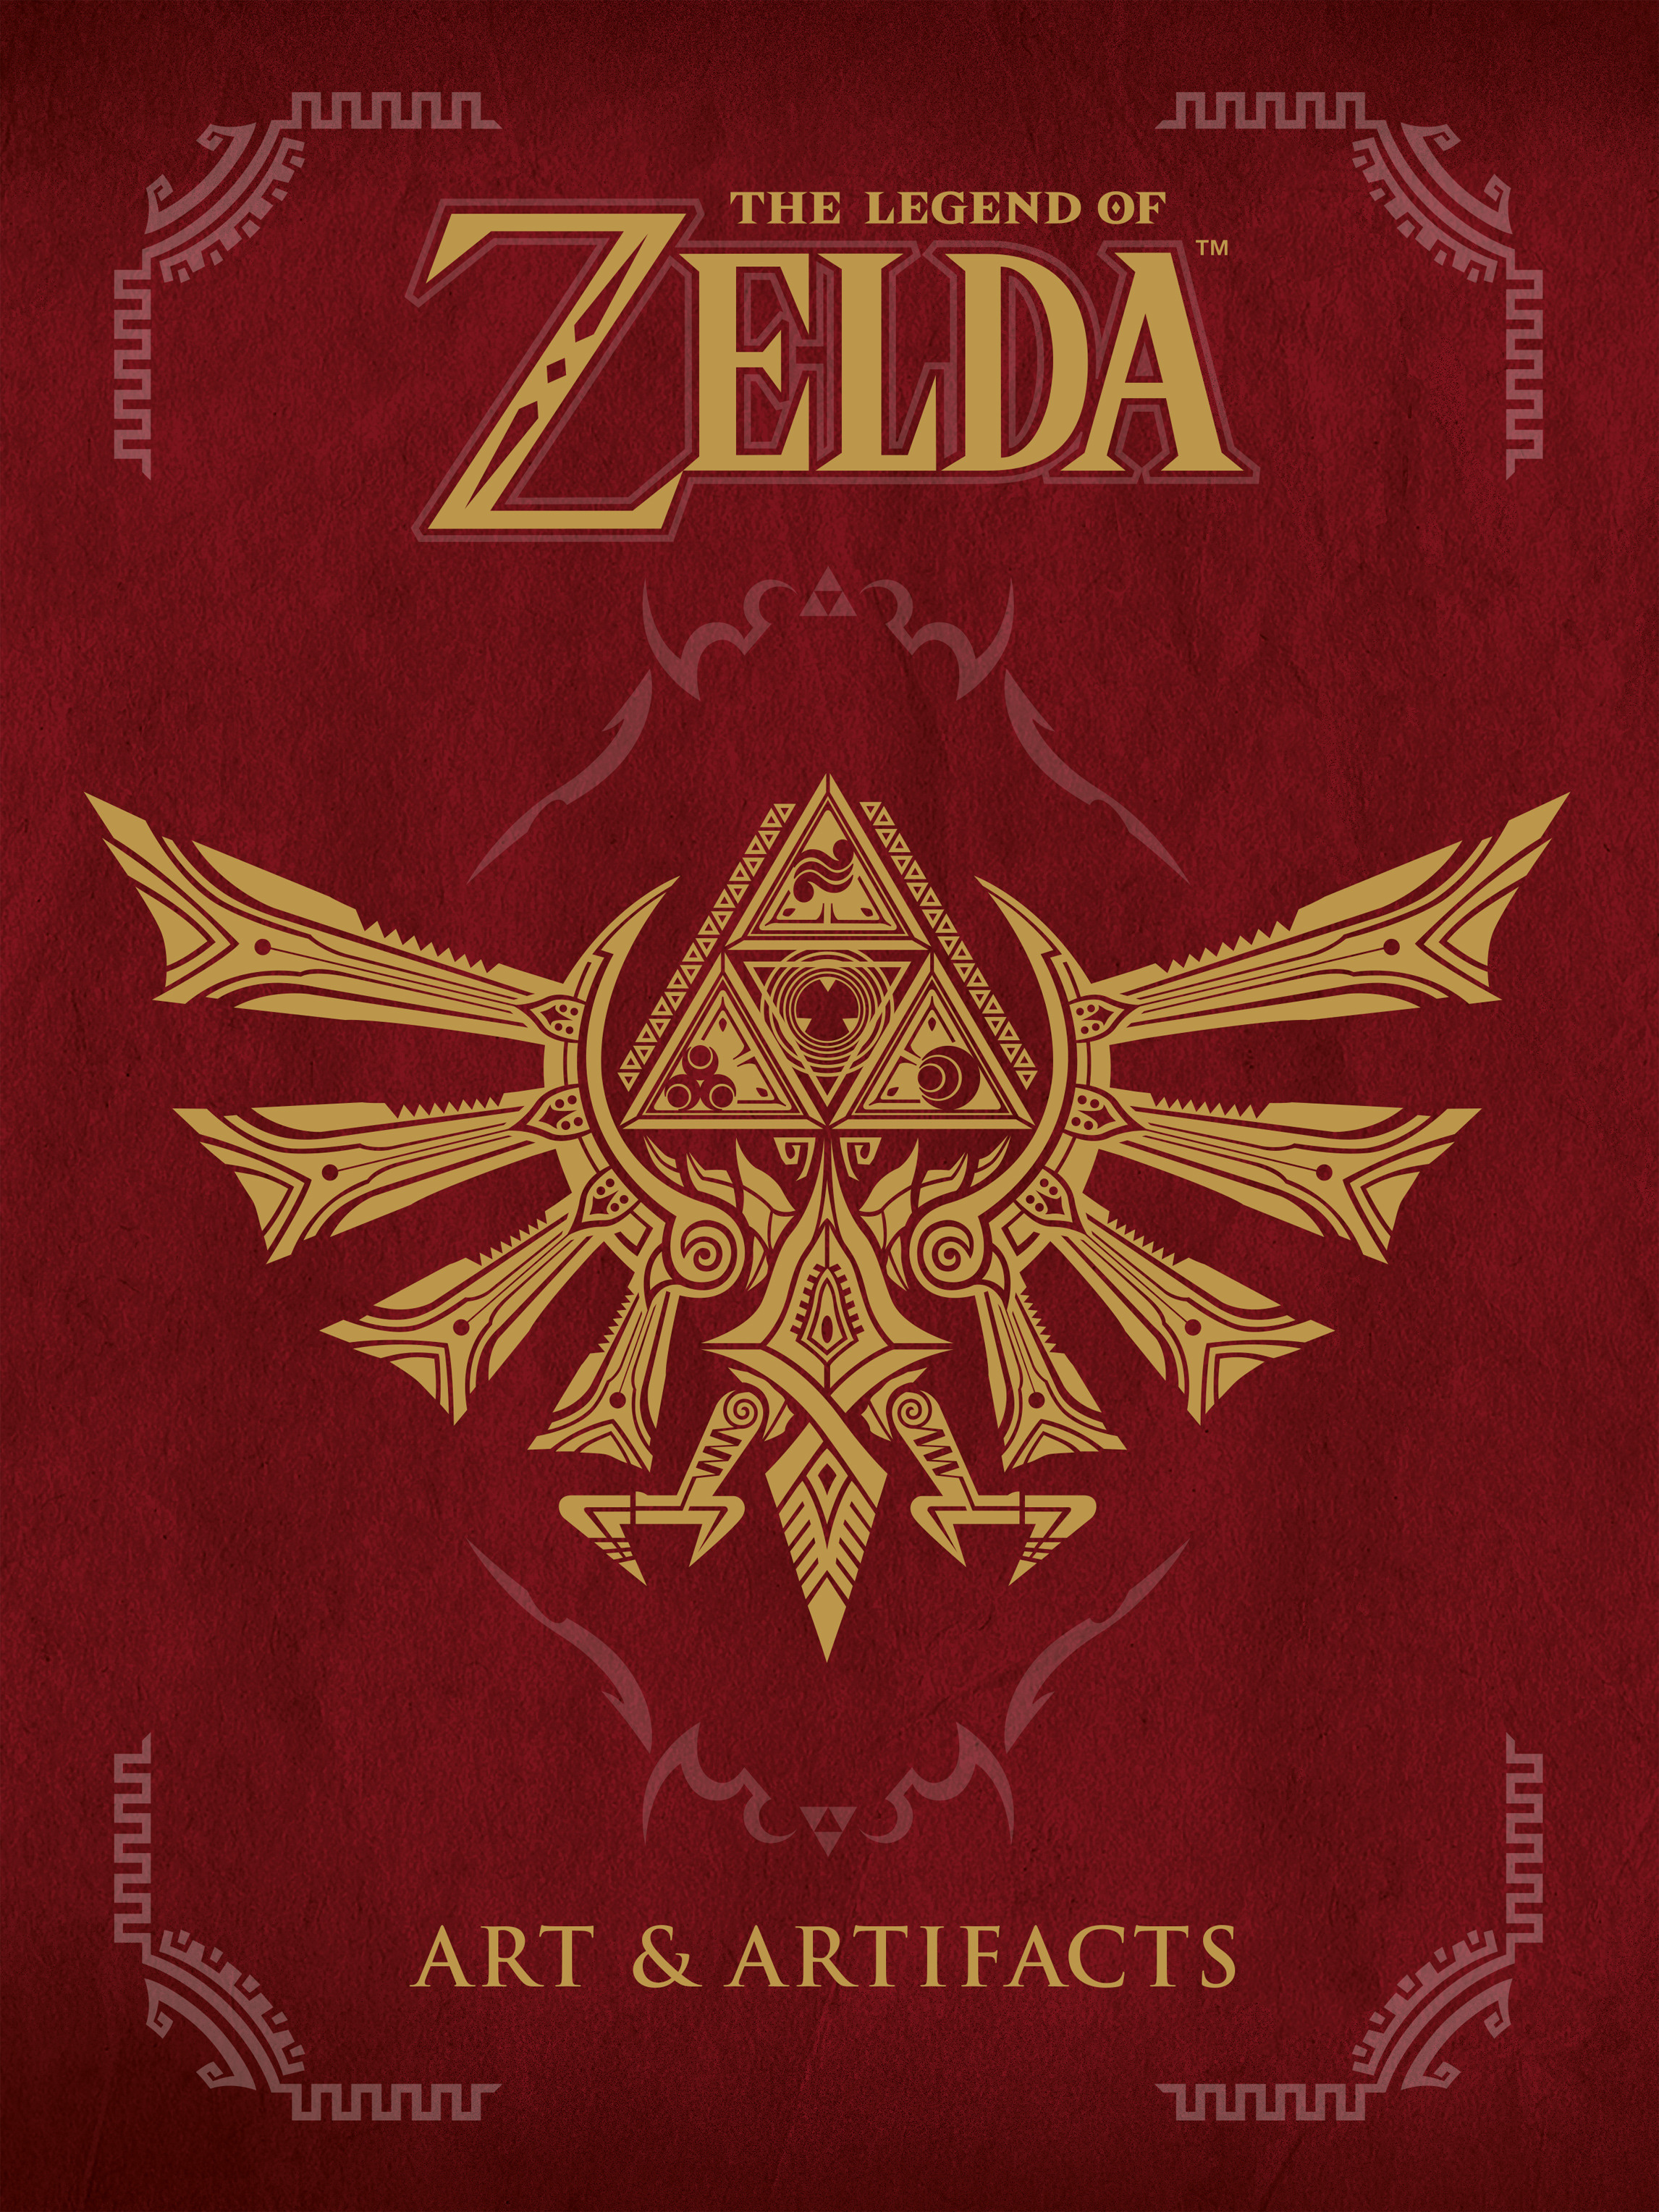 Read online The Legend of Zelda: Art & Artifacts comic -  Issue # TPB - 1